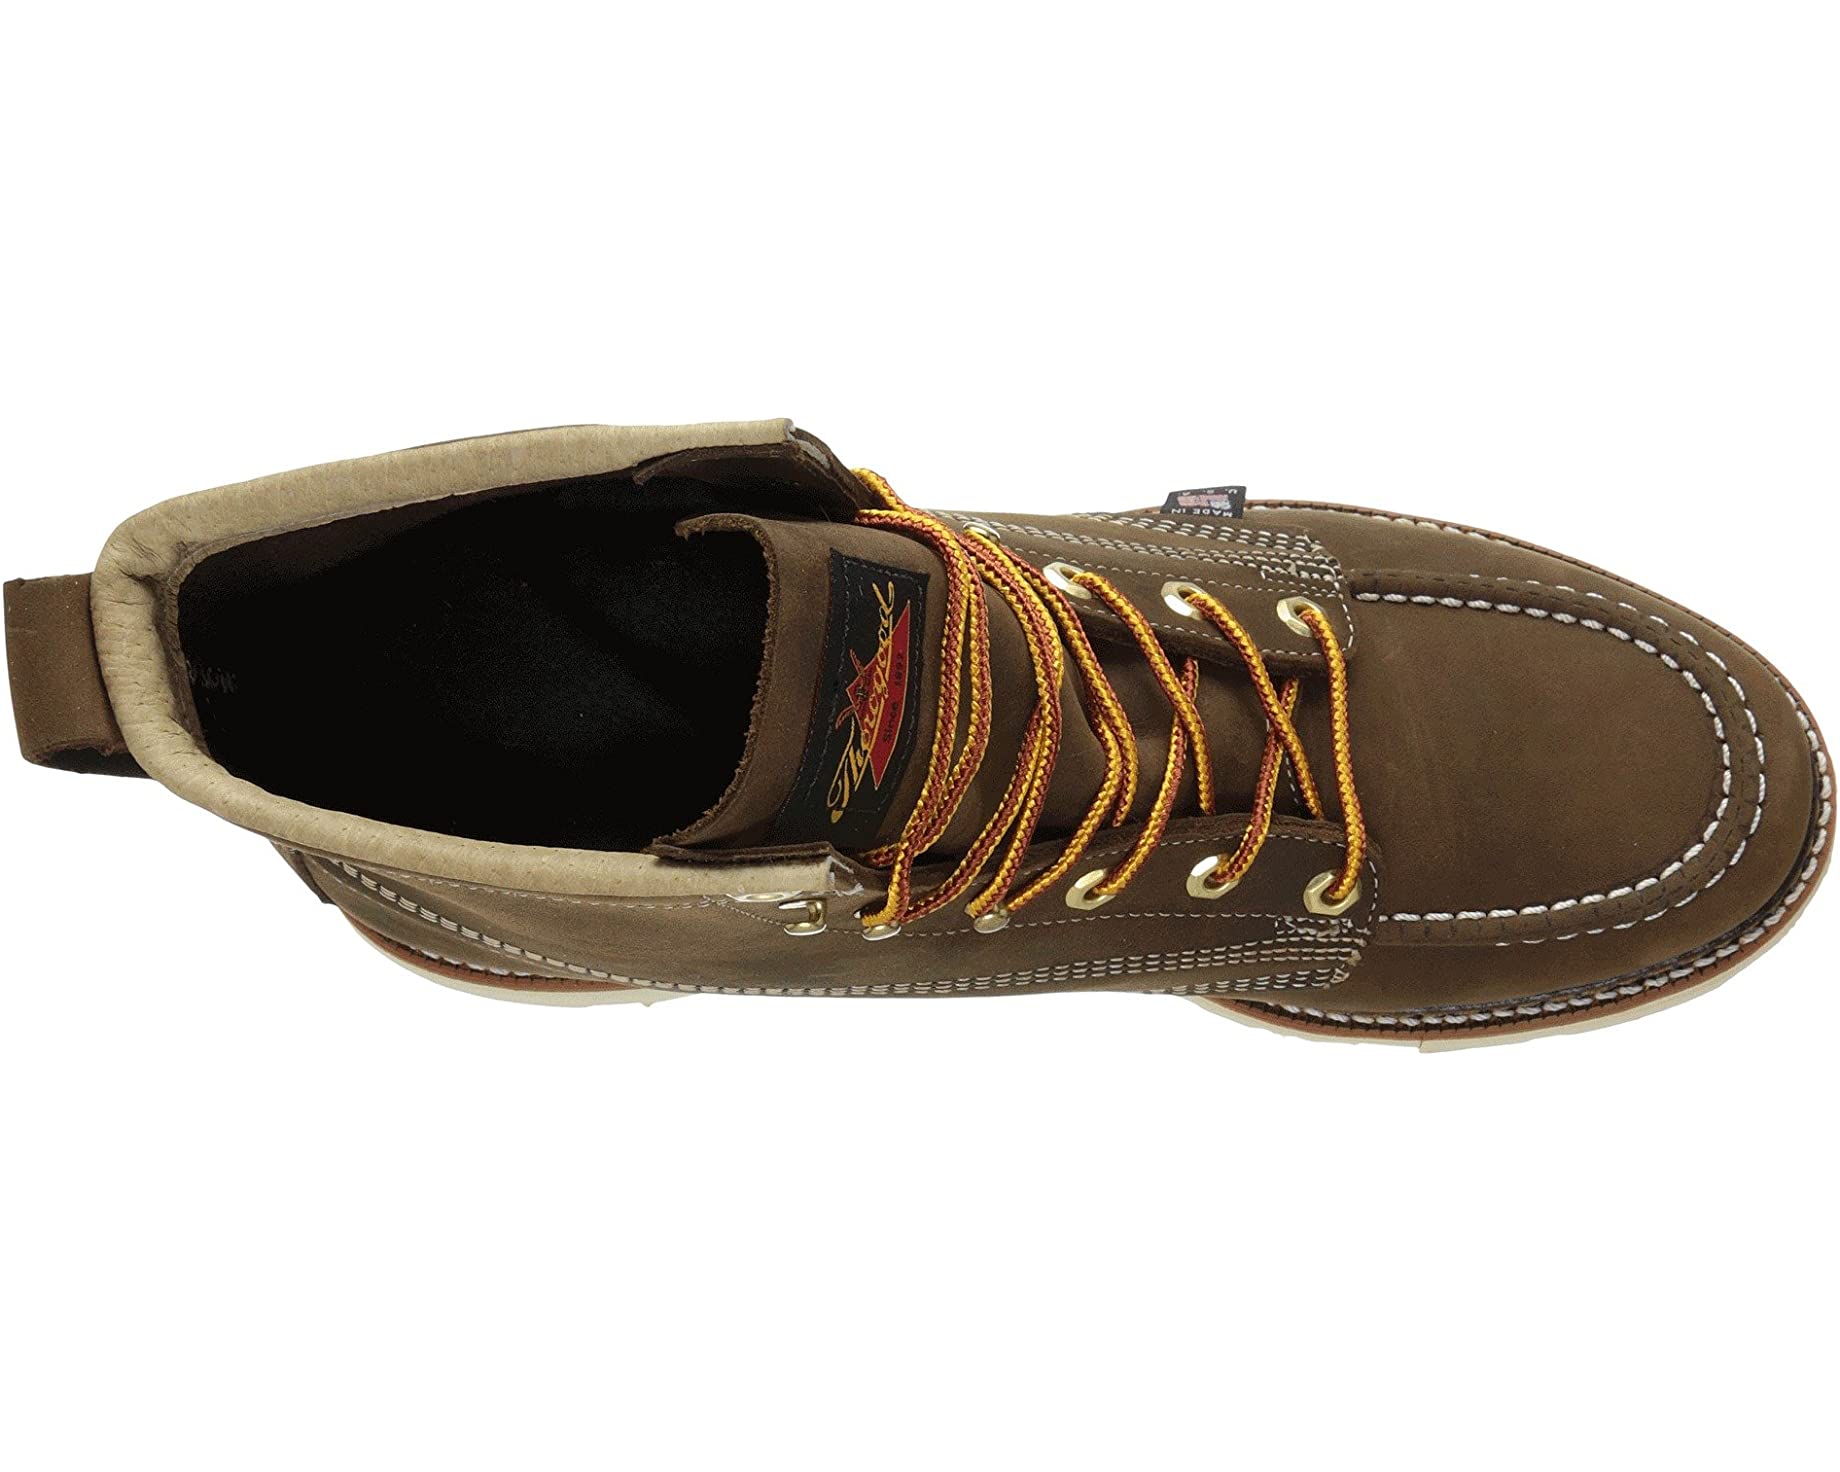 ботинки american heritage 6 moc toe safety thorogood табак Ботинки American Heritage 6 Moc Toe Safety Thorogood, коричневый